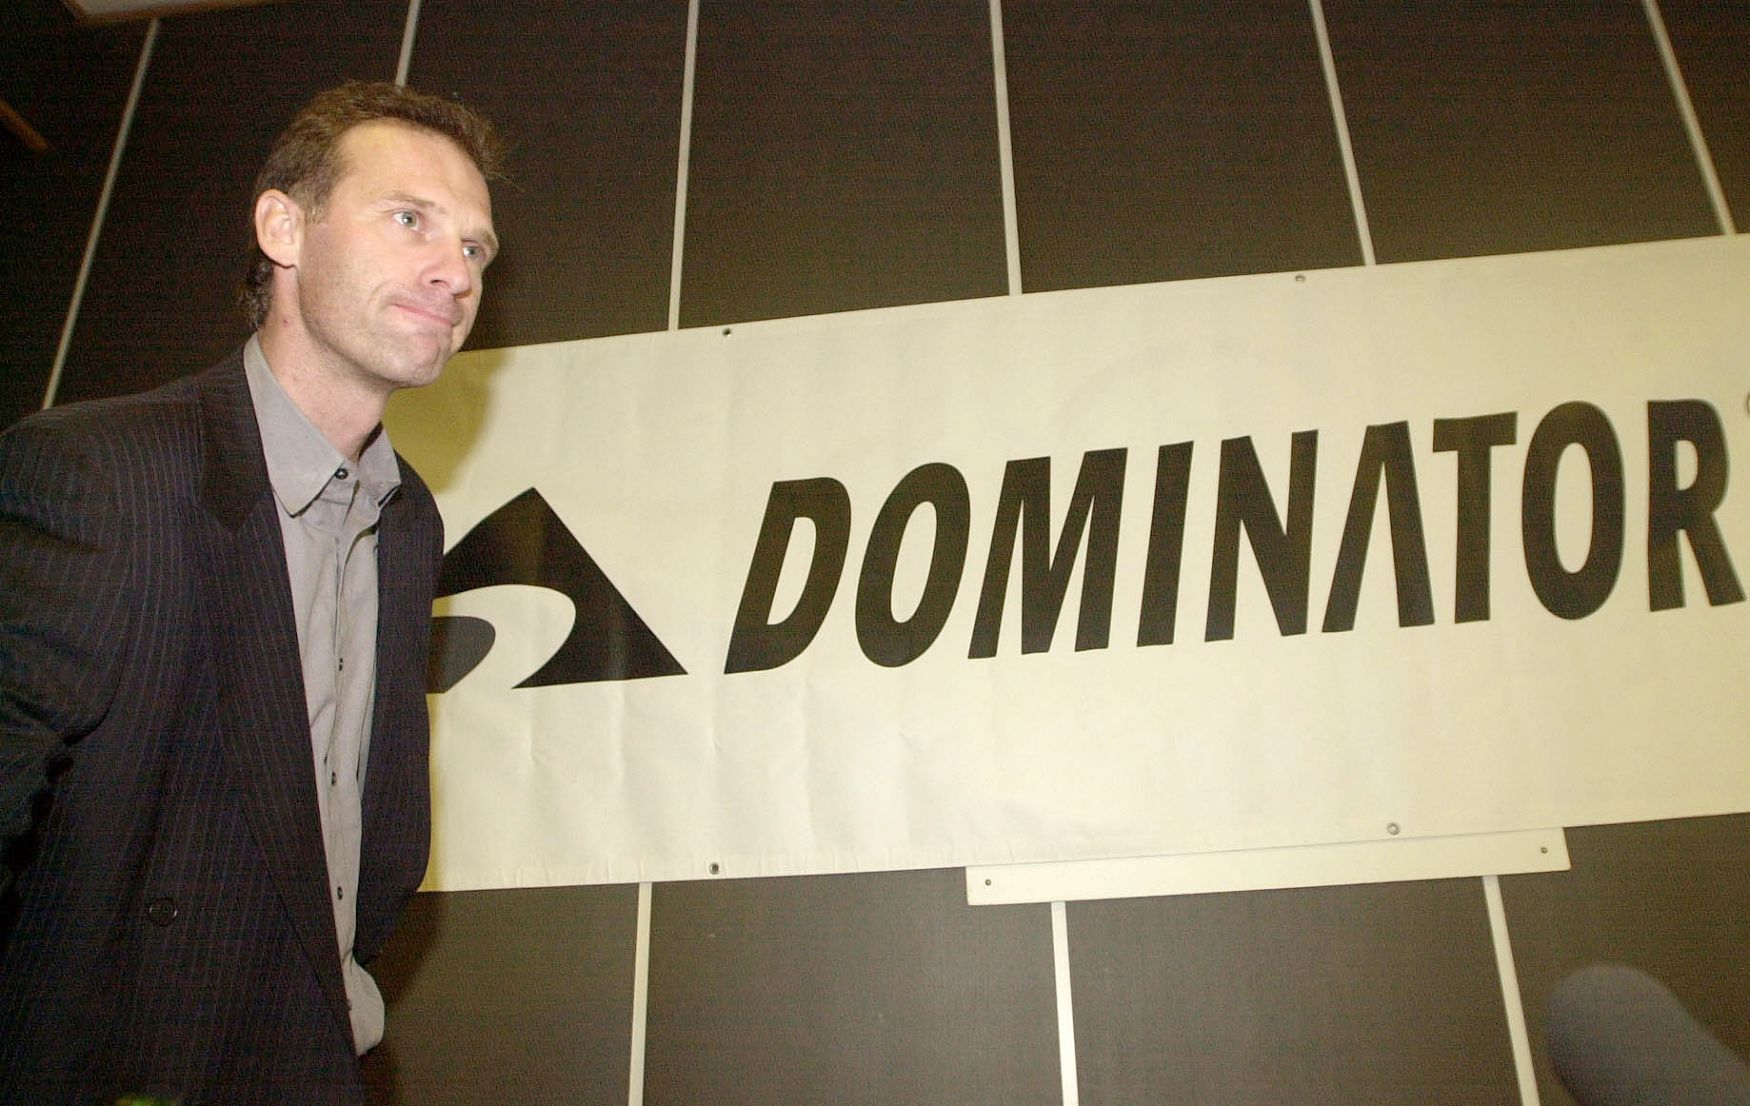 Dominik Hašek - firma Dominator (2002)